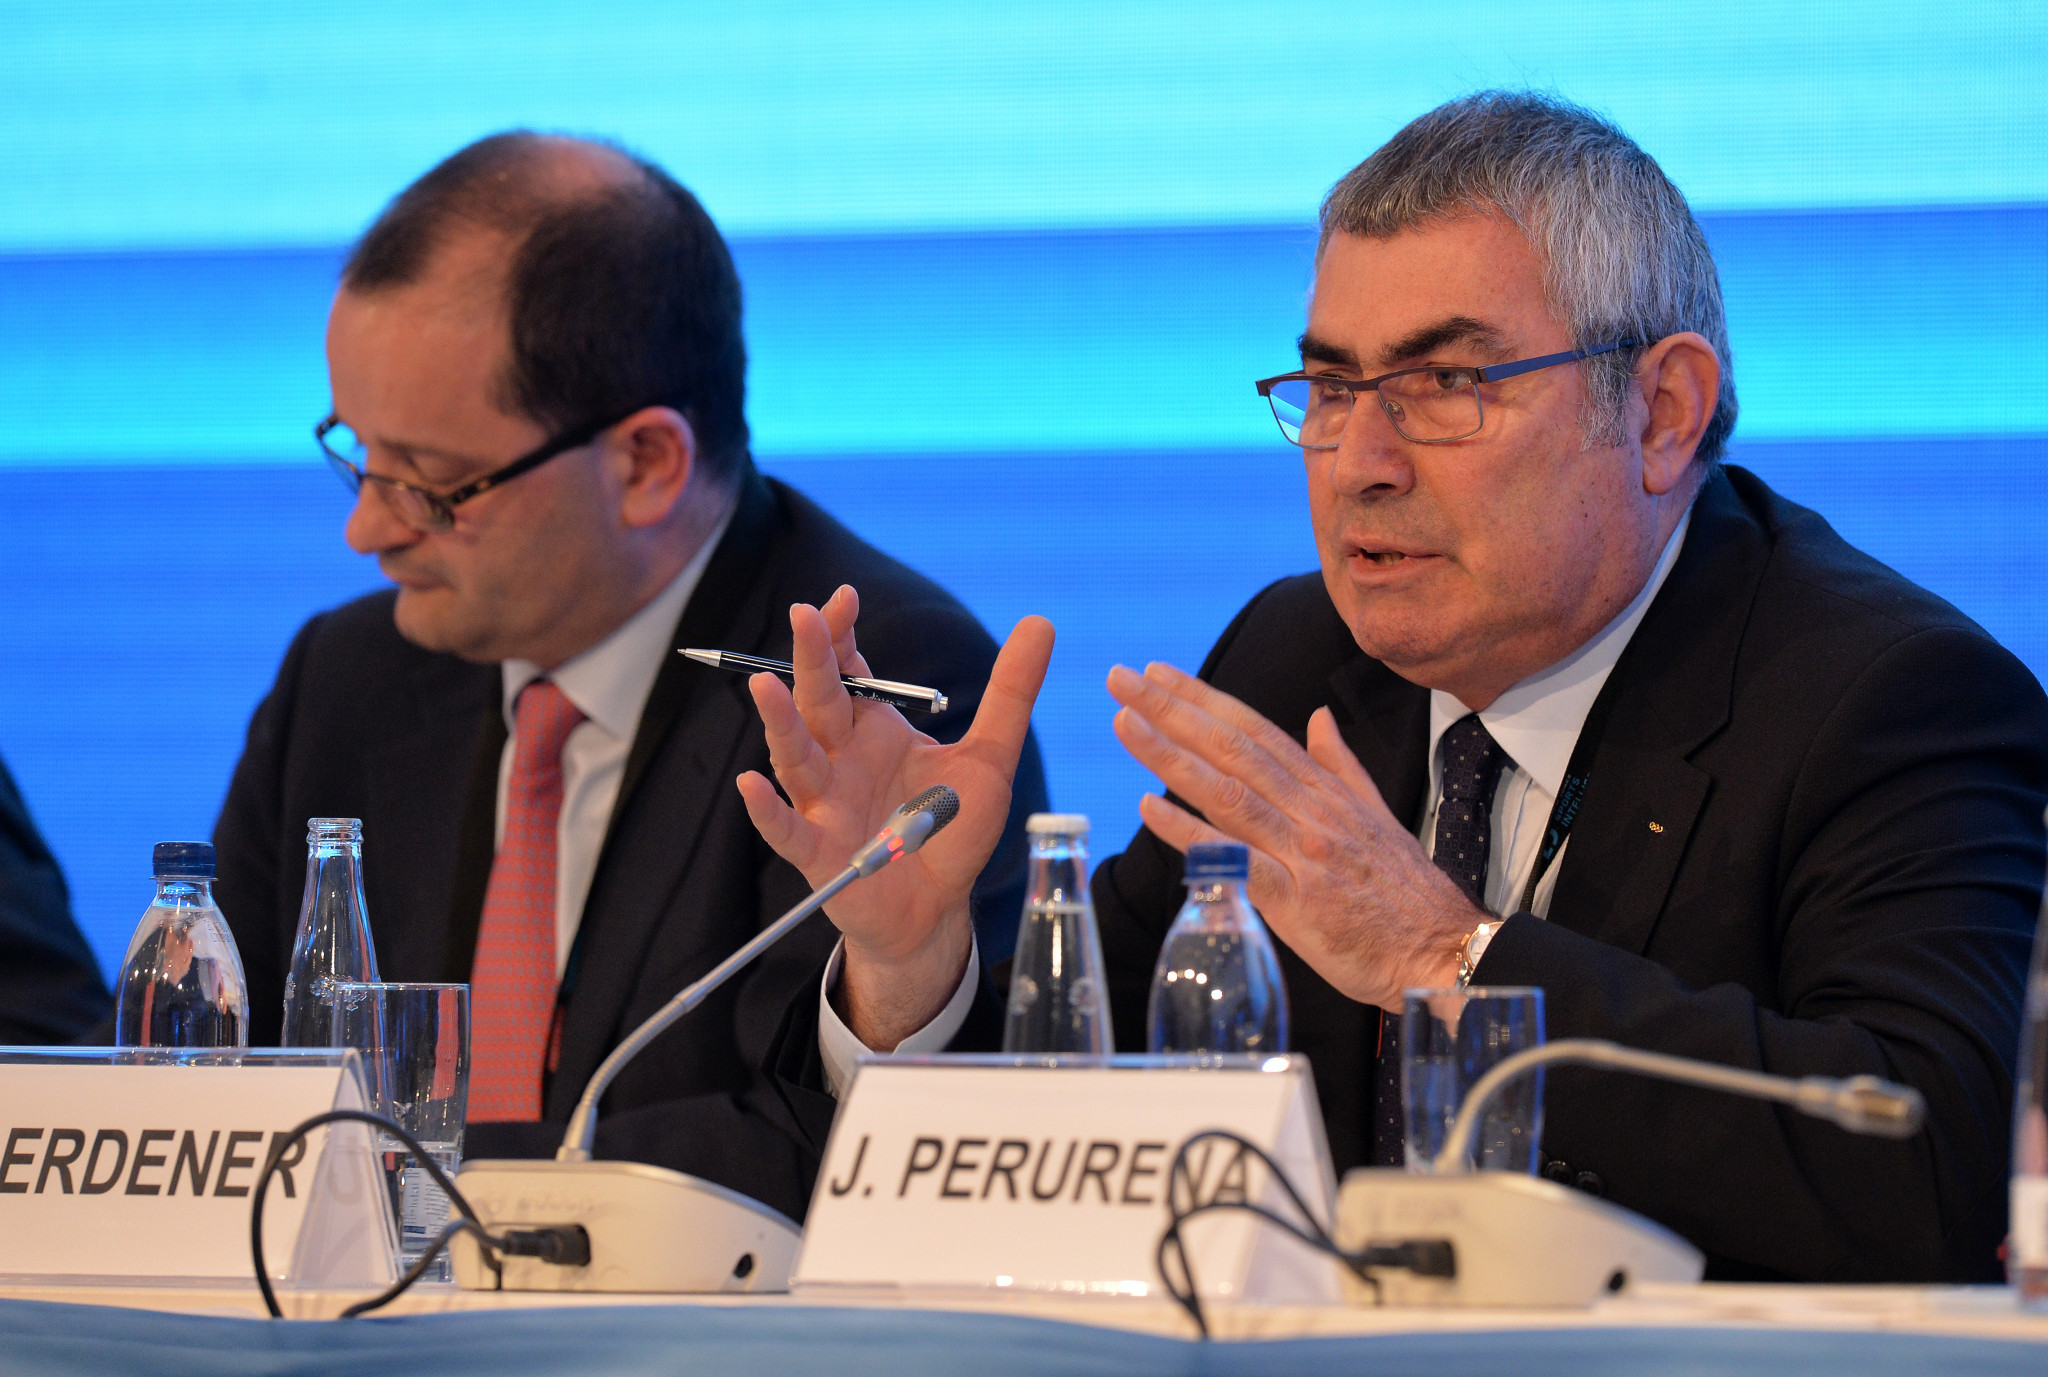 Uğur Erdener, right, has been named ASOIF vice-president ©Getty Images